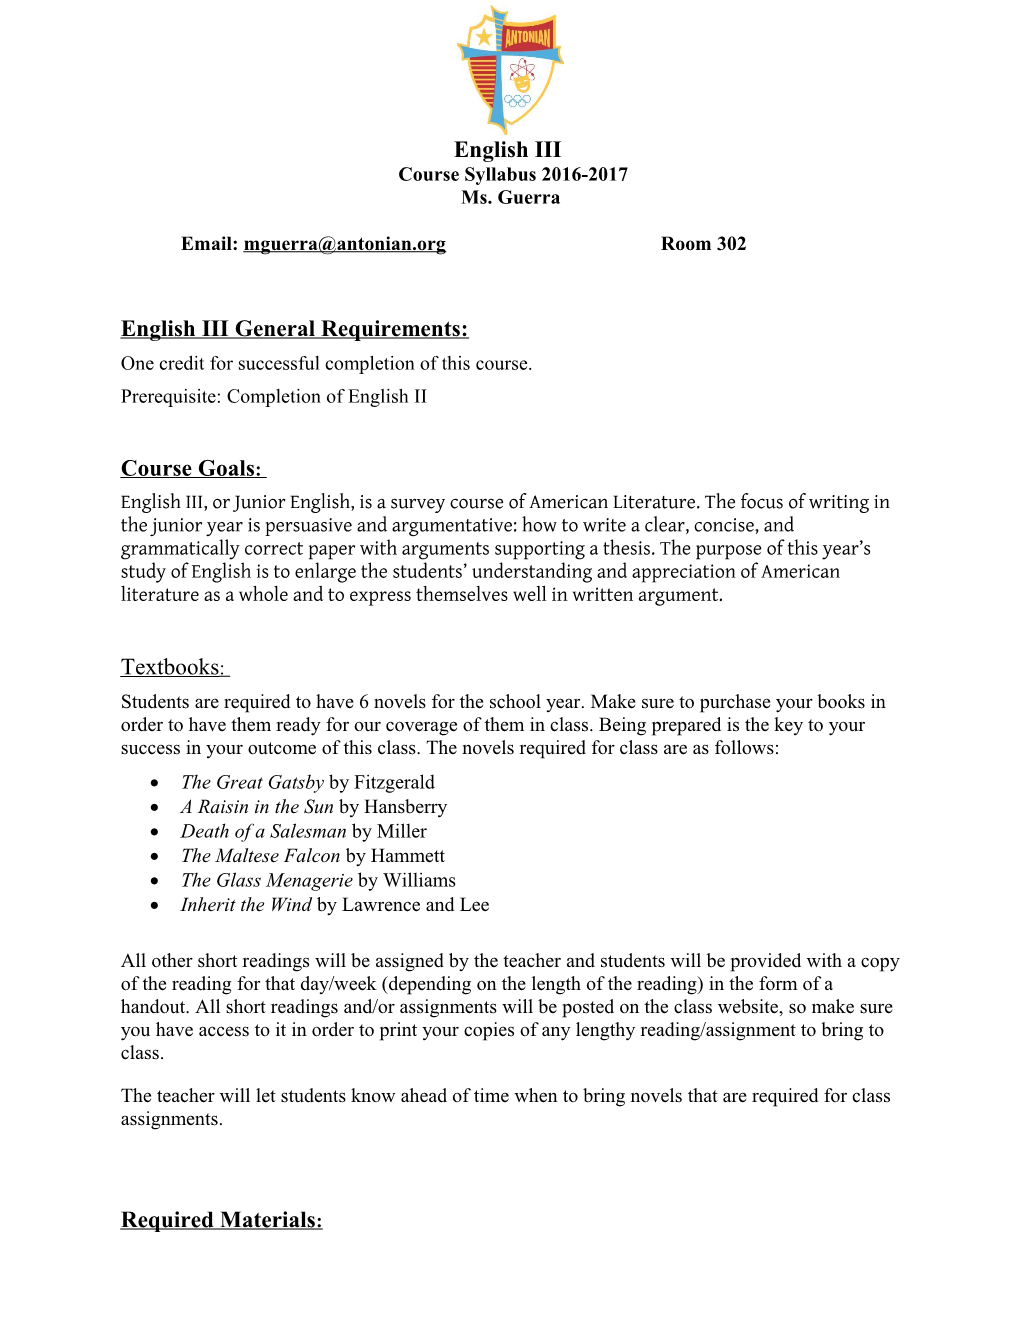 English III General Requirements